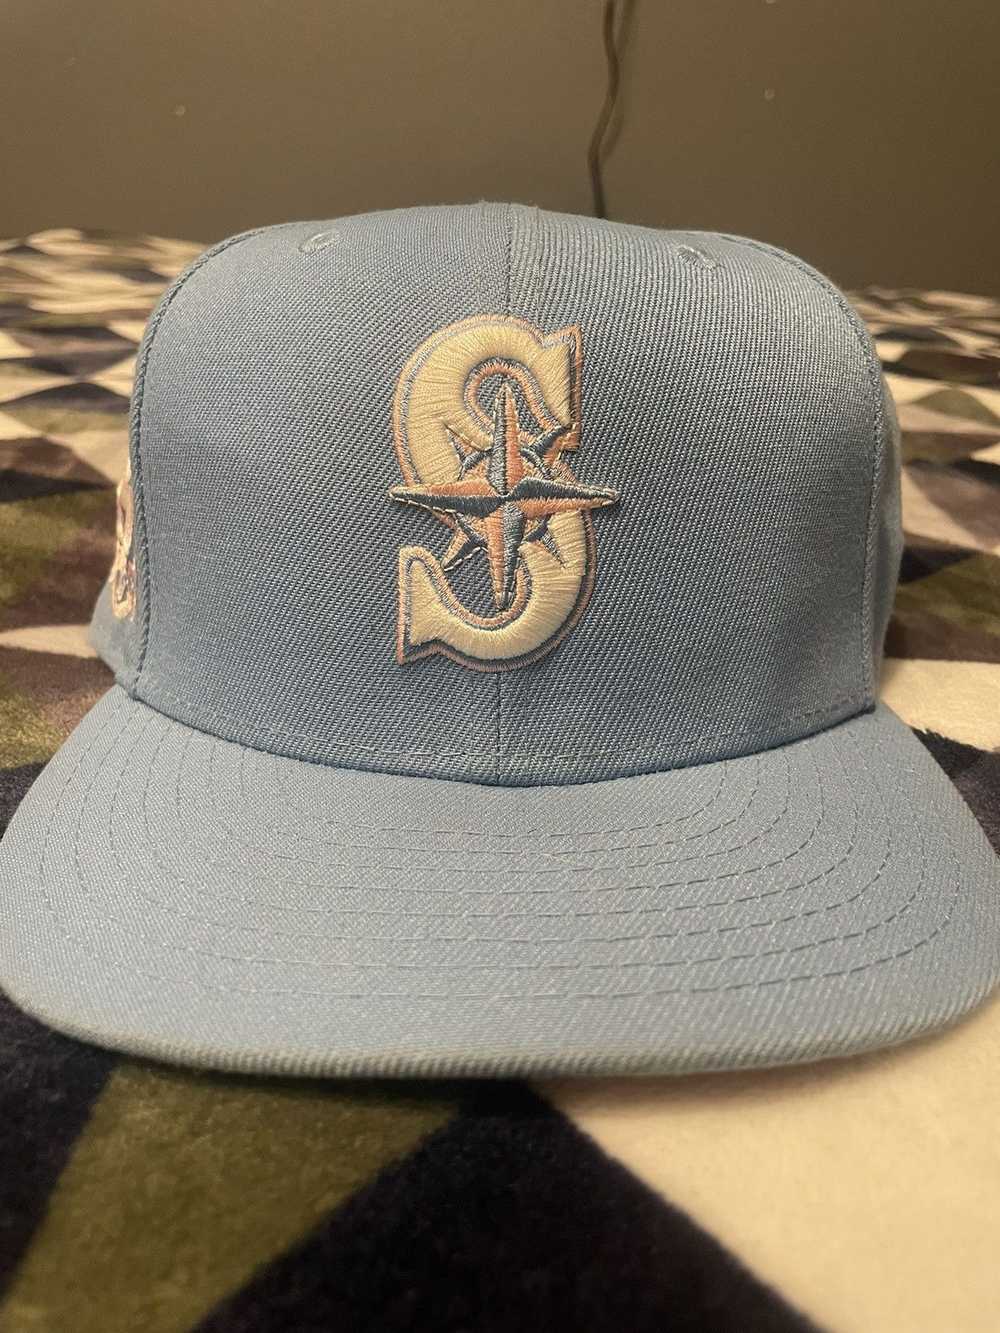 New Era New era mariners baseball hat - image 1